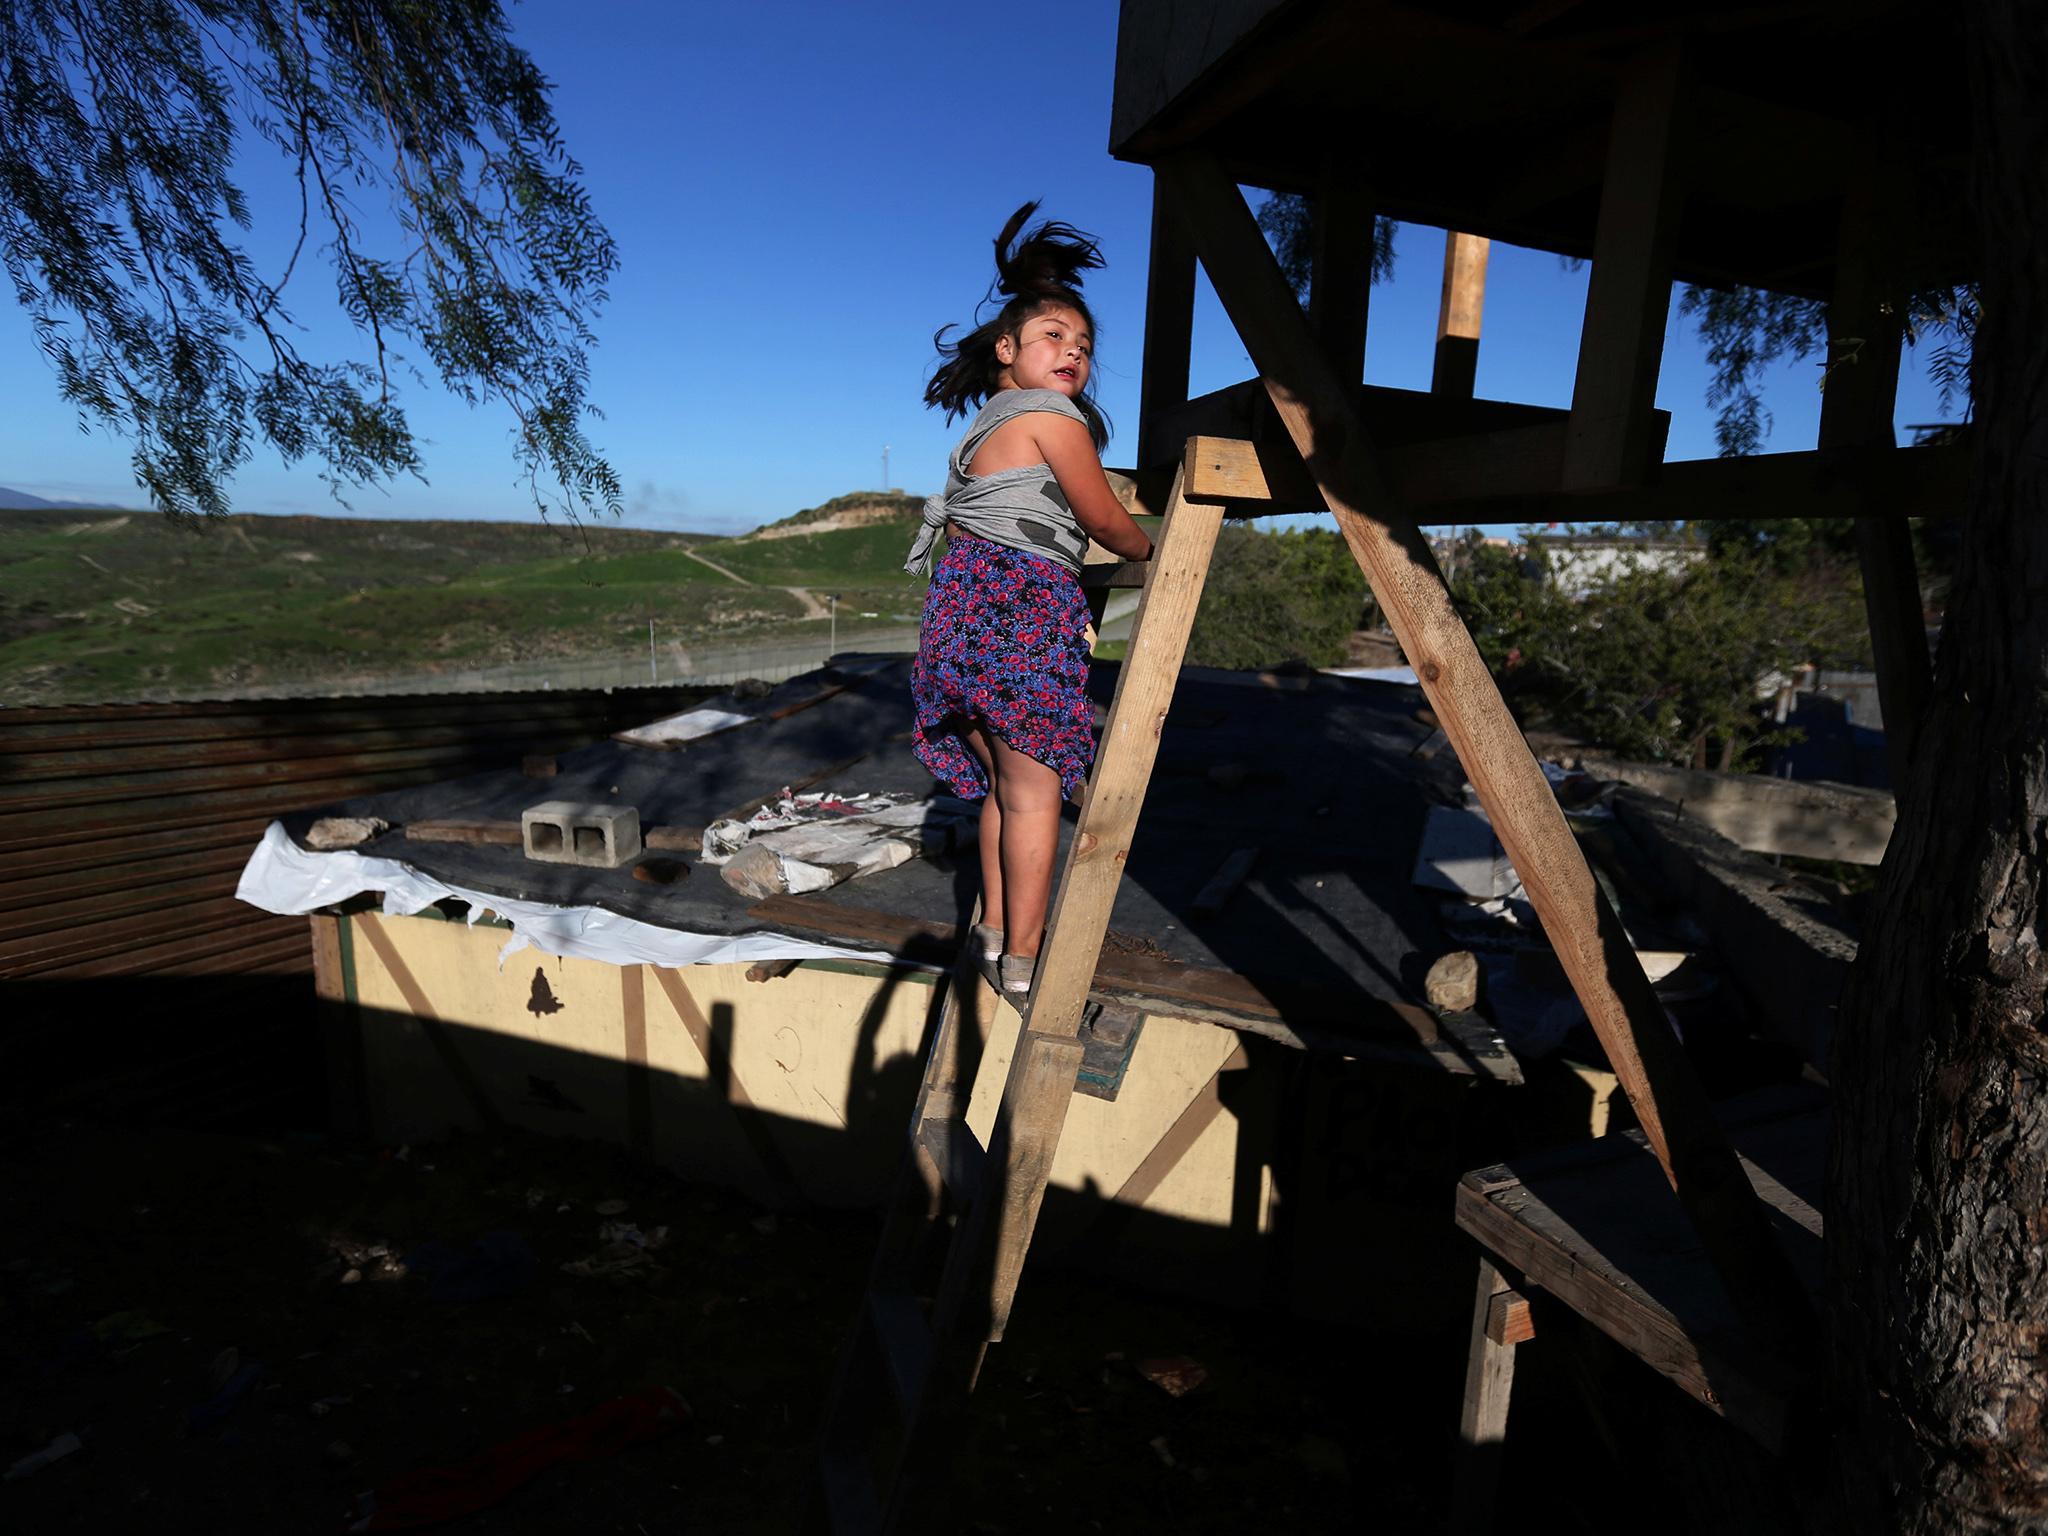 Locals in Tijuana say the area has been dangerous for years (Reuters)